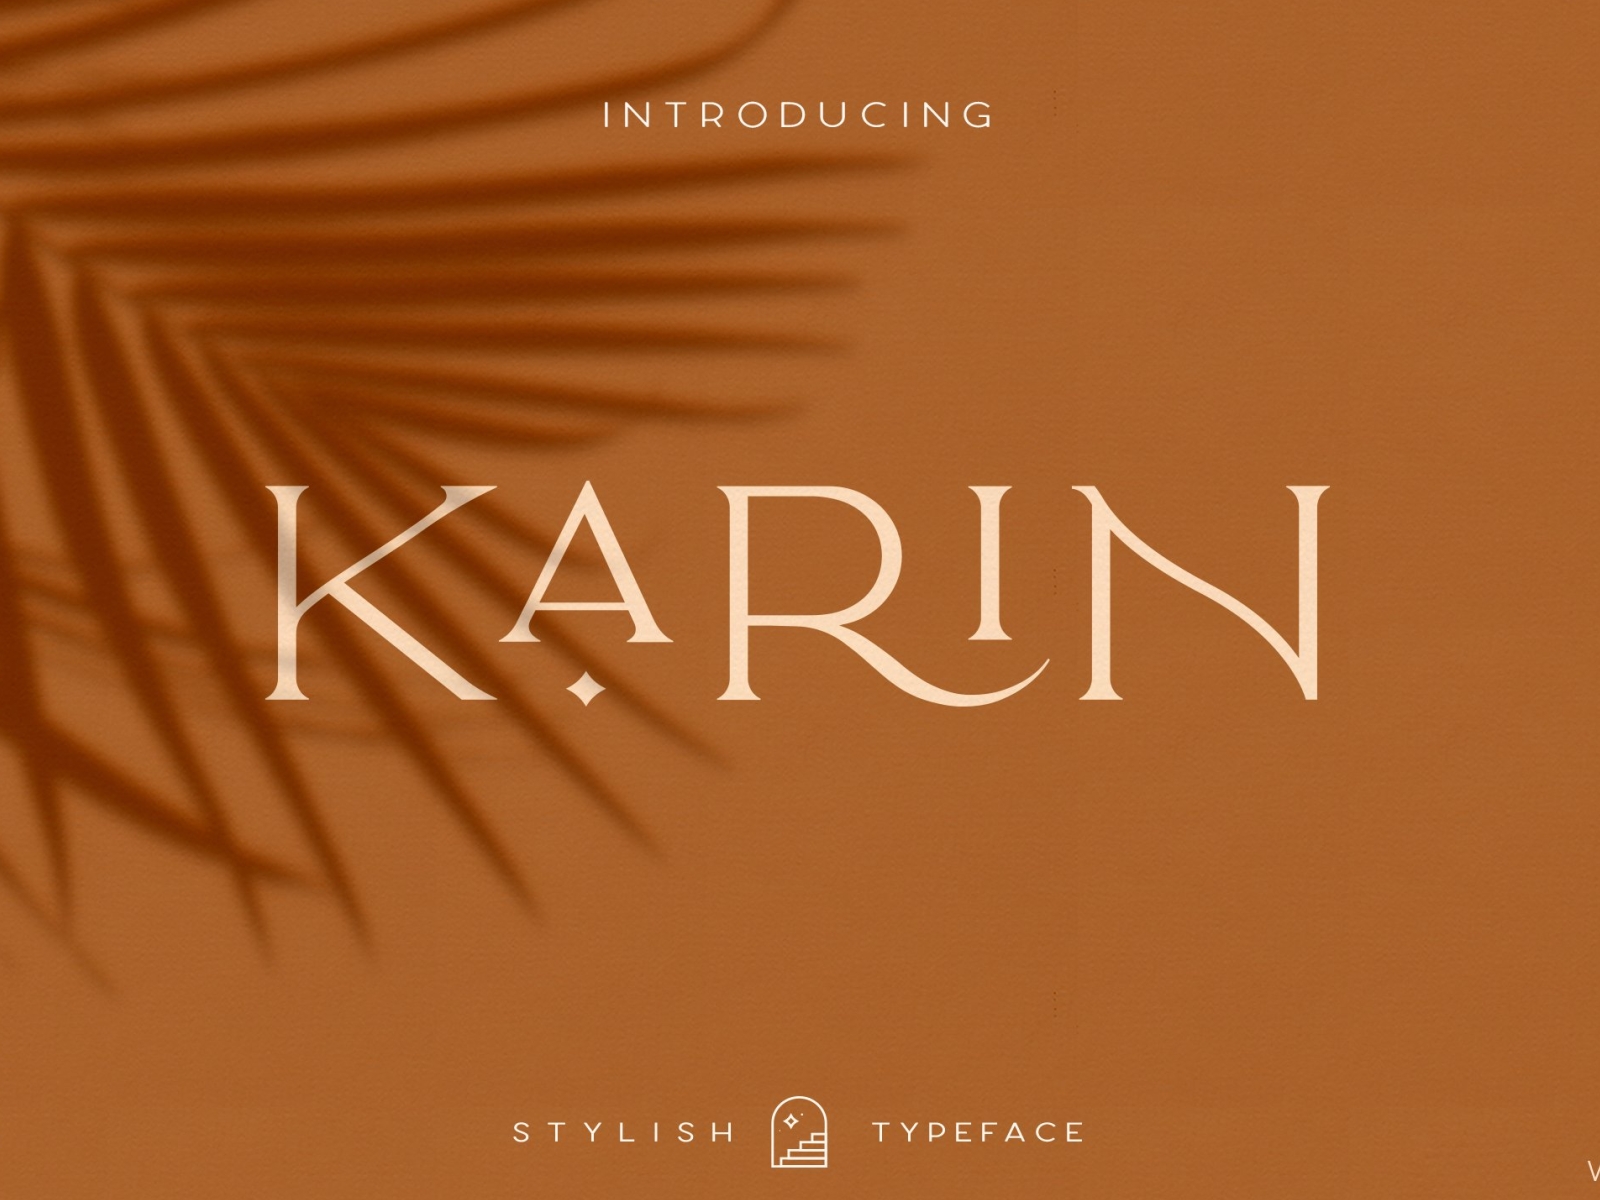 Elegant Karin - Stylish Font by Best Fonts on Dribbble